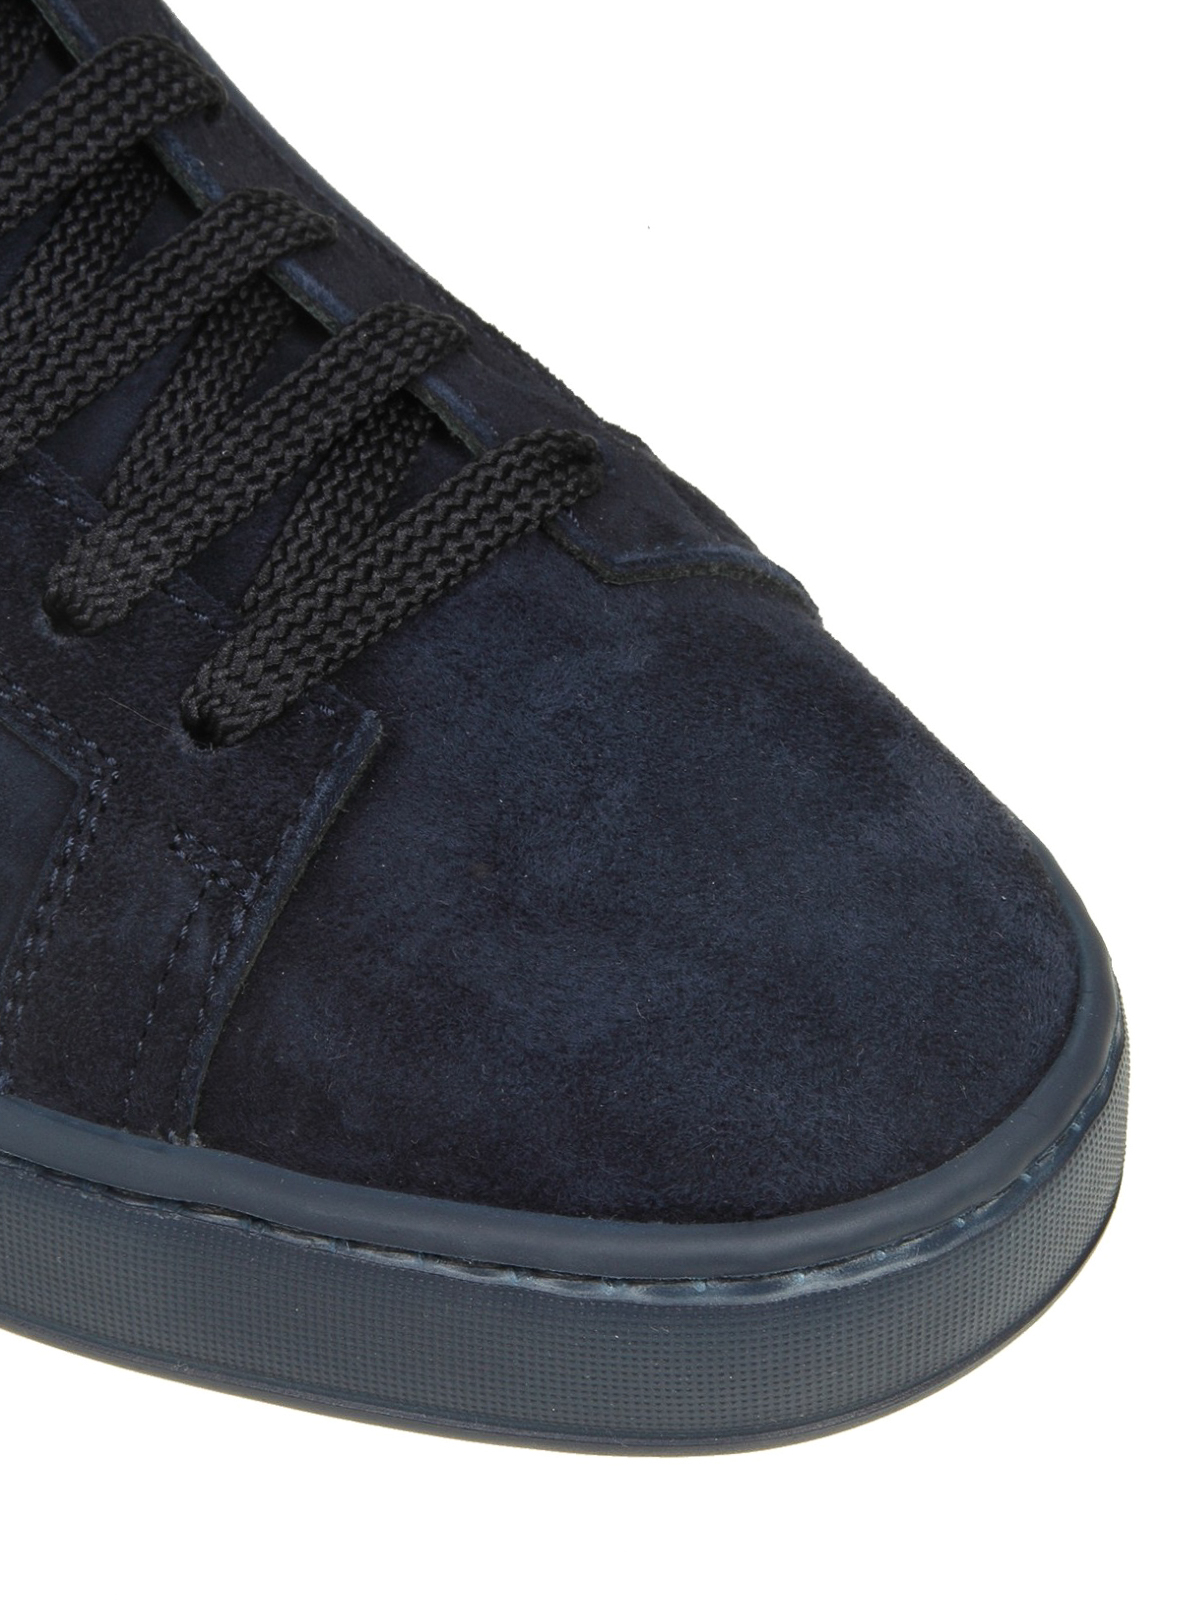 Trainers Santoni - Blue suede low top sneakers - MBCN20826UA6RSRKU82